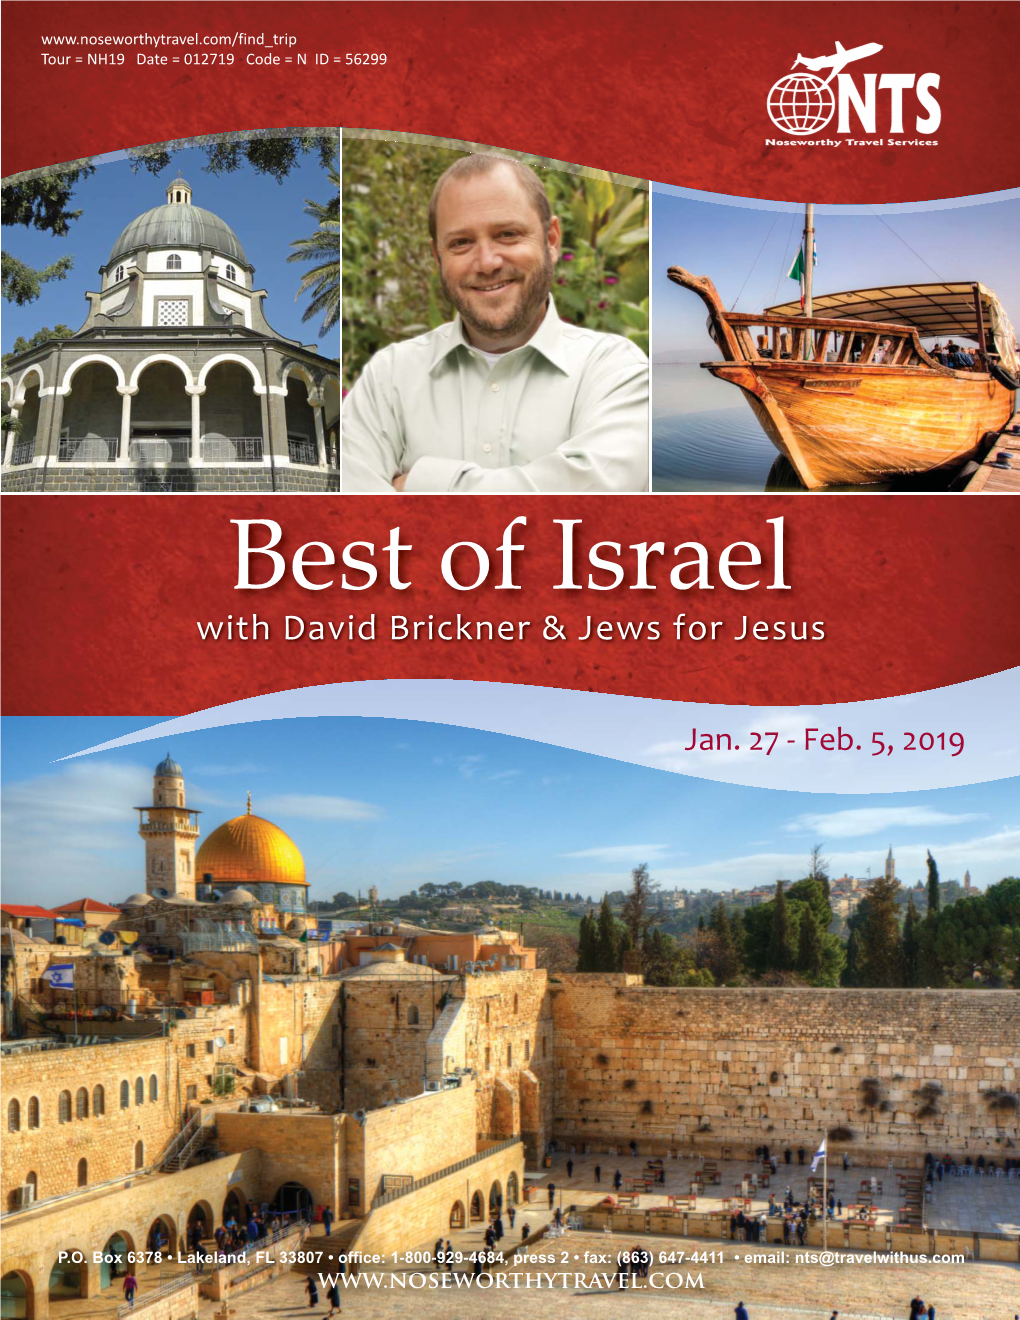 Best of Israel with David Brickner & Jews for Jesus